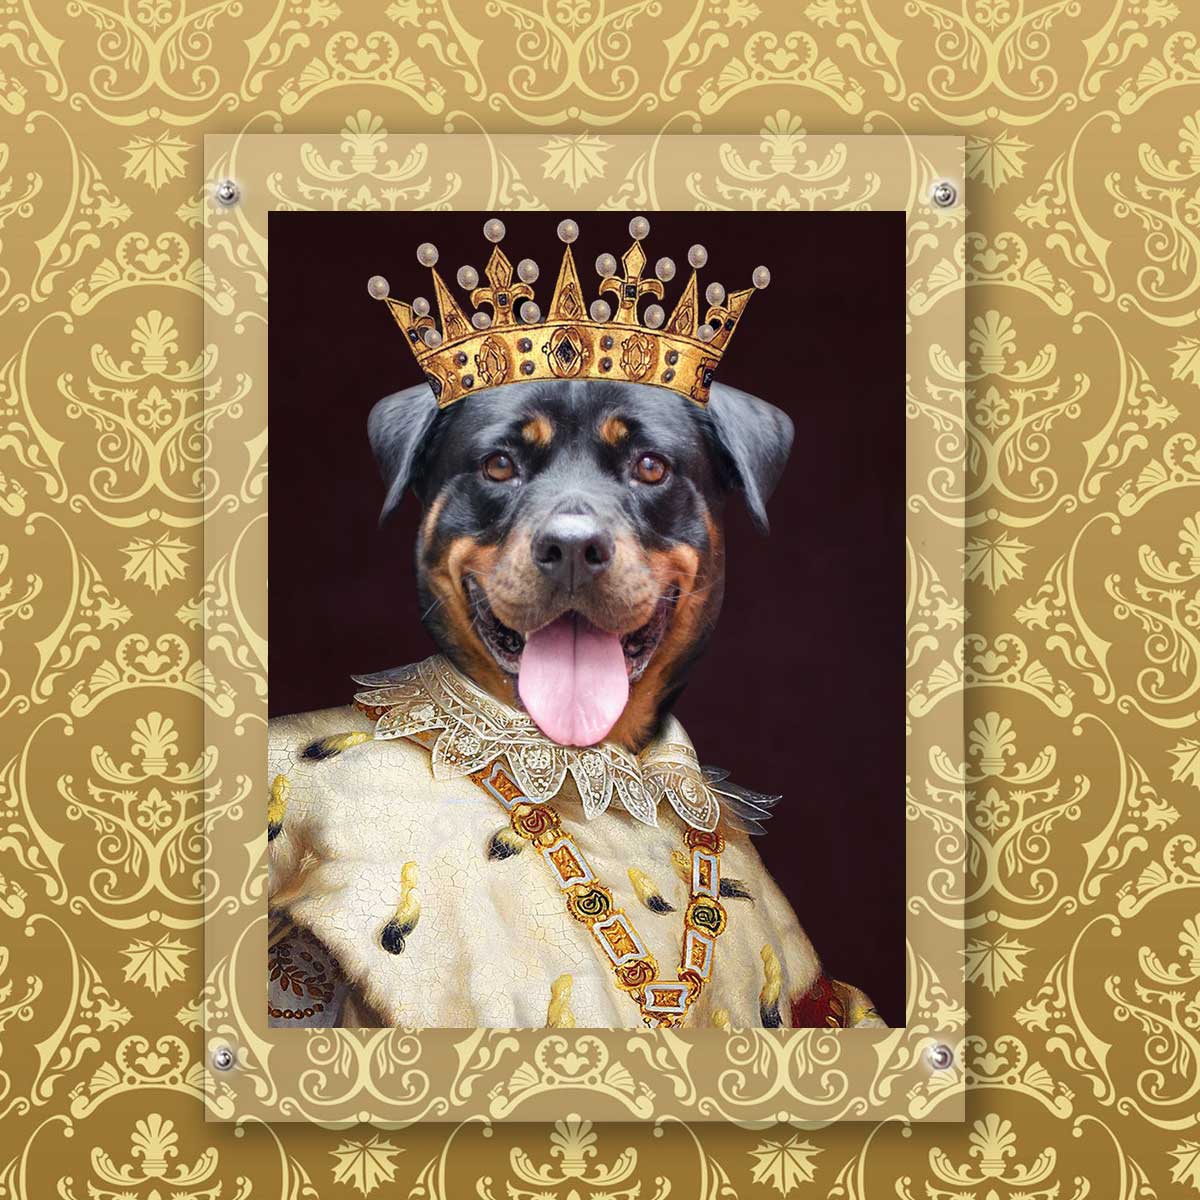 His Highness Digital Portrait Photo Frame